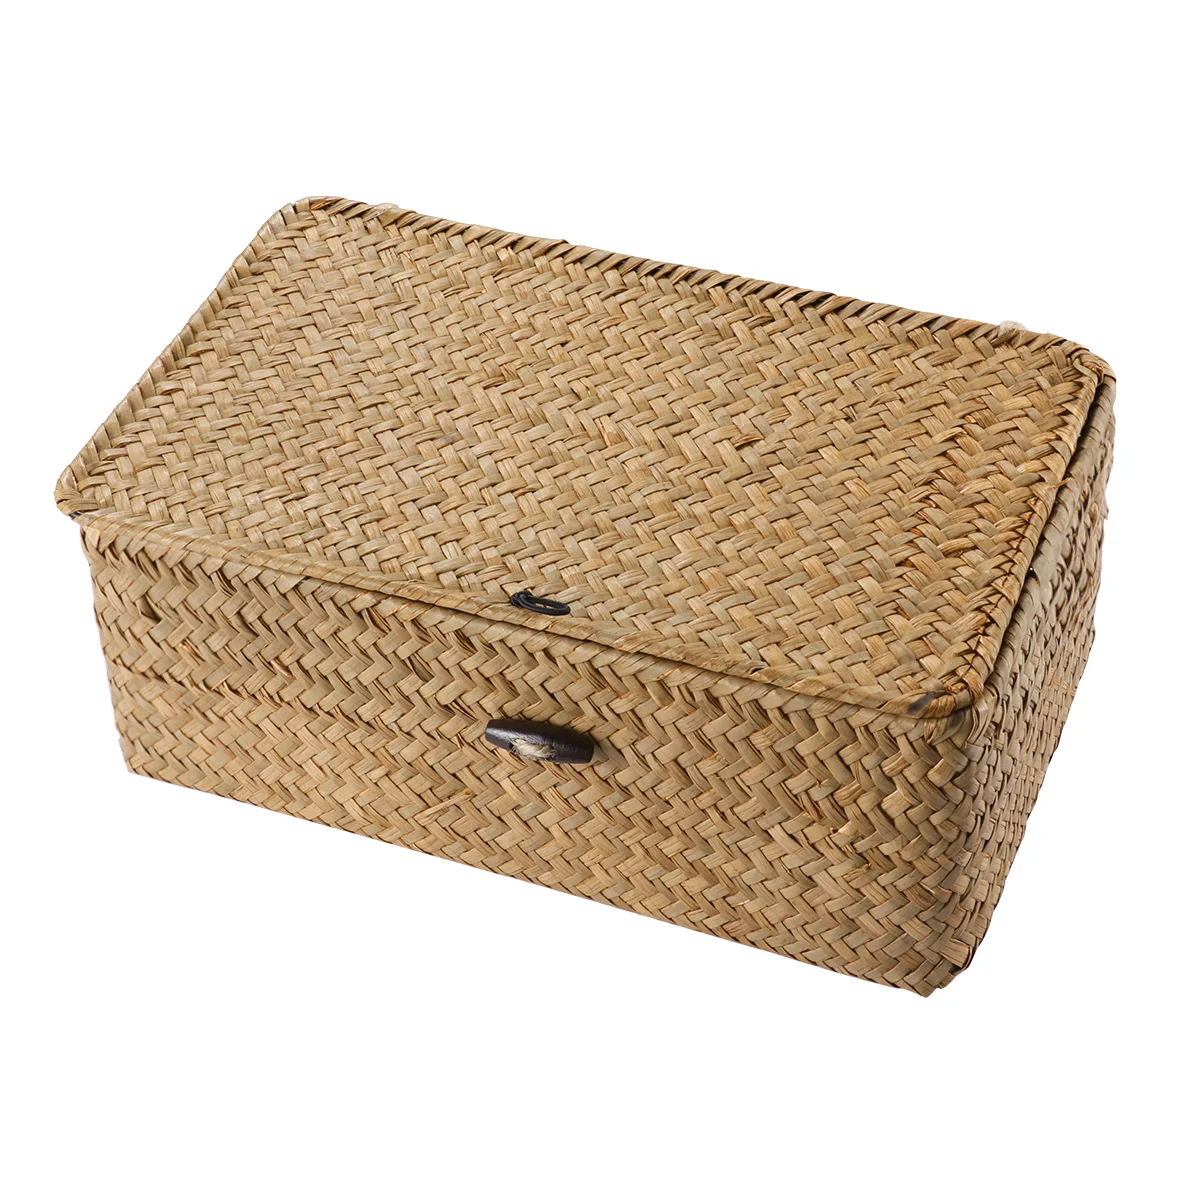 

Storage Basket Woven Box Baskets Lid Desktop Seaweed Lids Wicker Rattan Boxes Organizing Home Table Straw Shelves Decorative